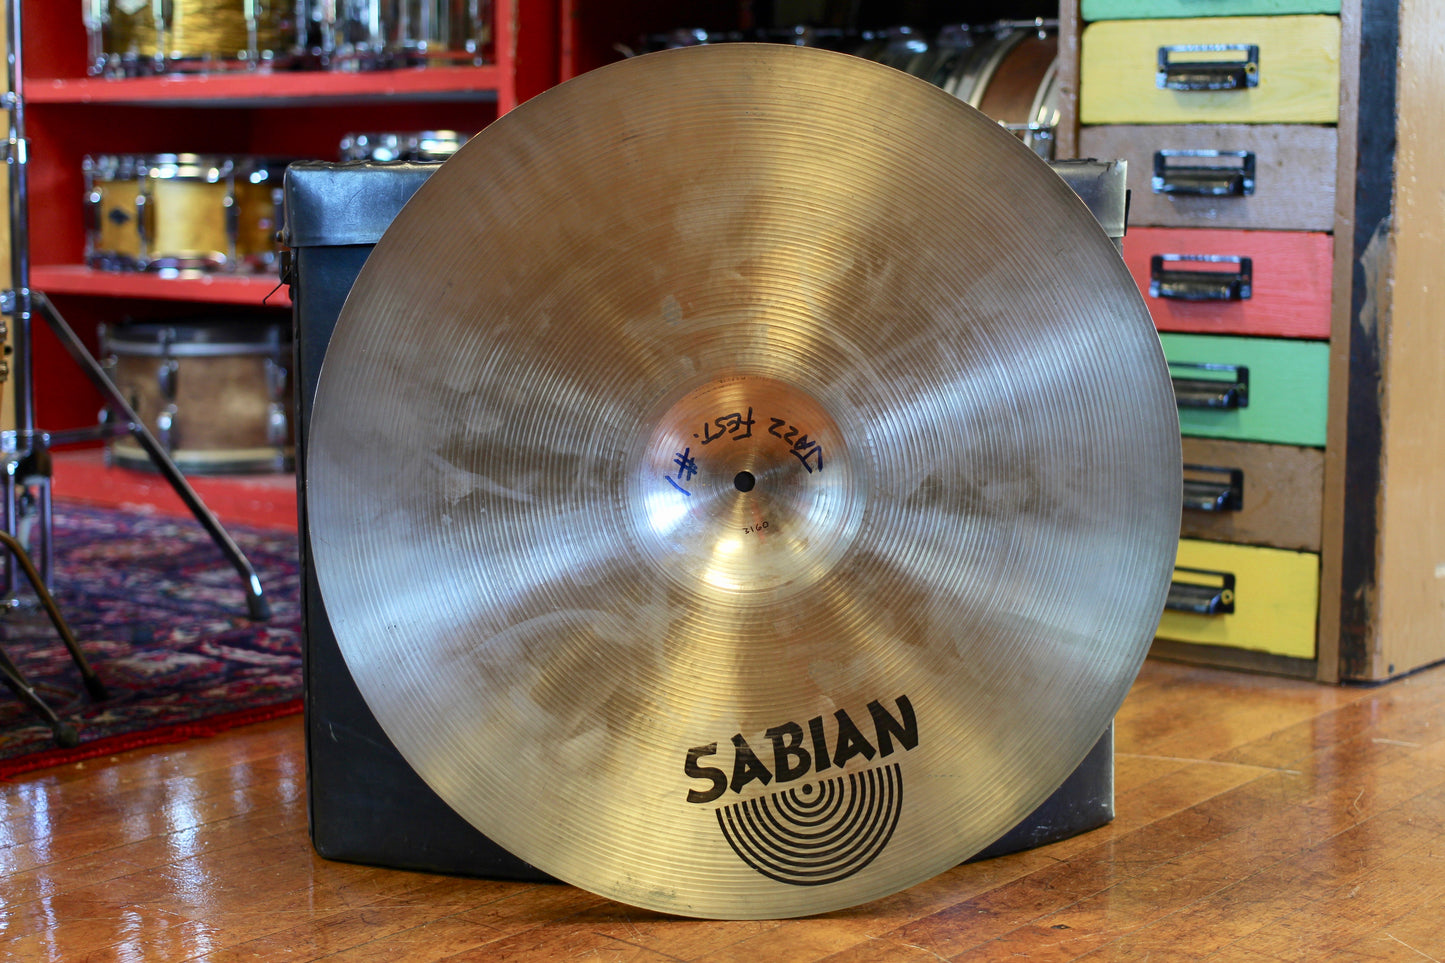 Sabian Ed Shaughnessy Signature 21" Ride Cymbal 3160g - USED